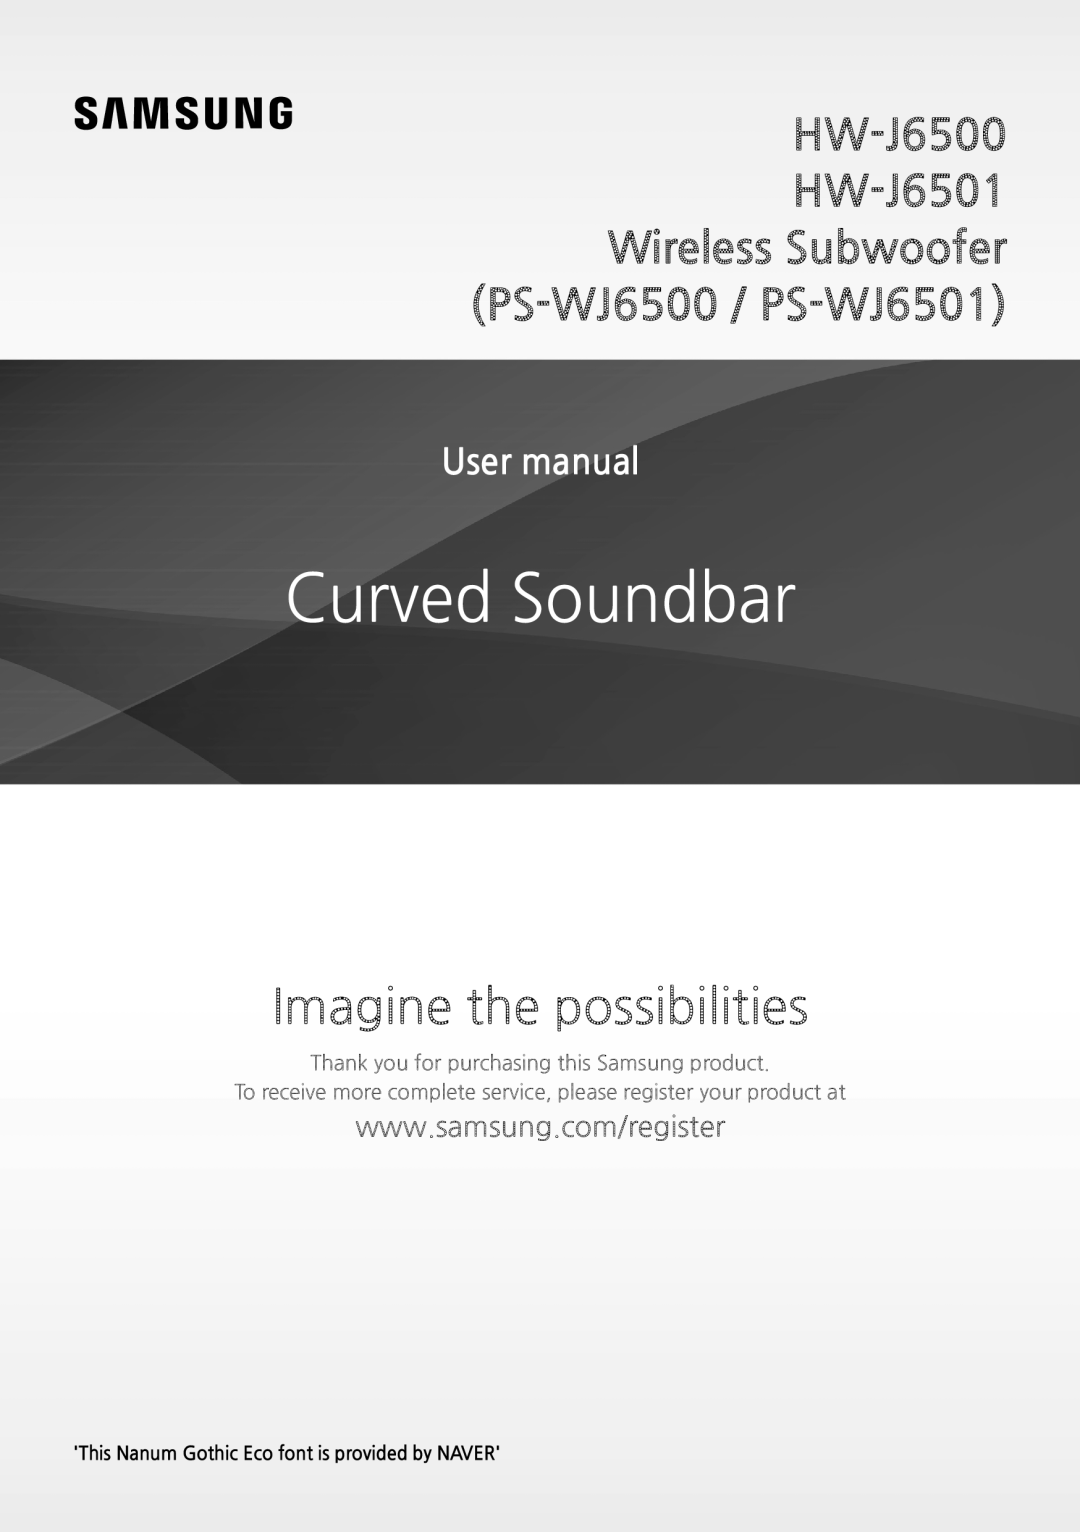 Standard Curved HW-J650 HW-J8500